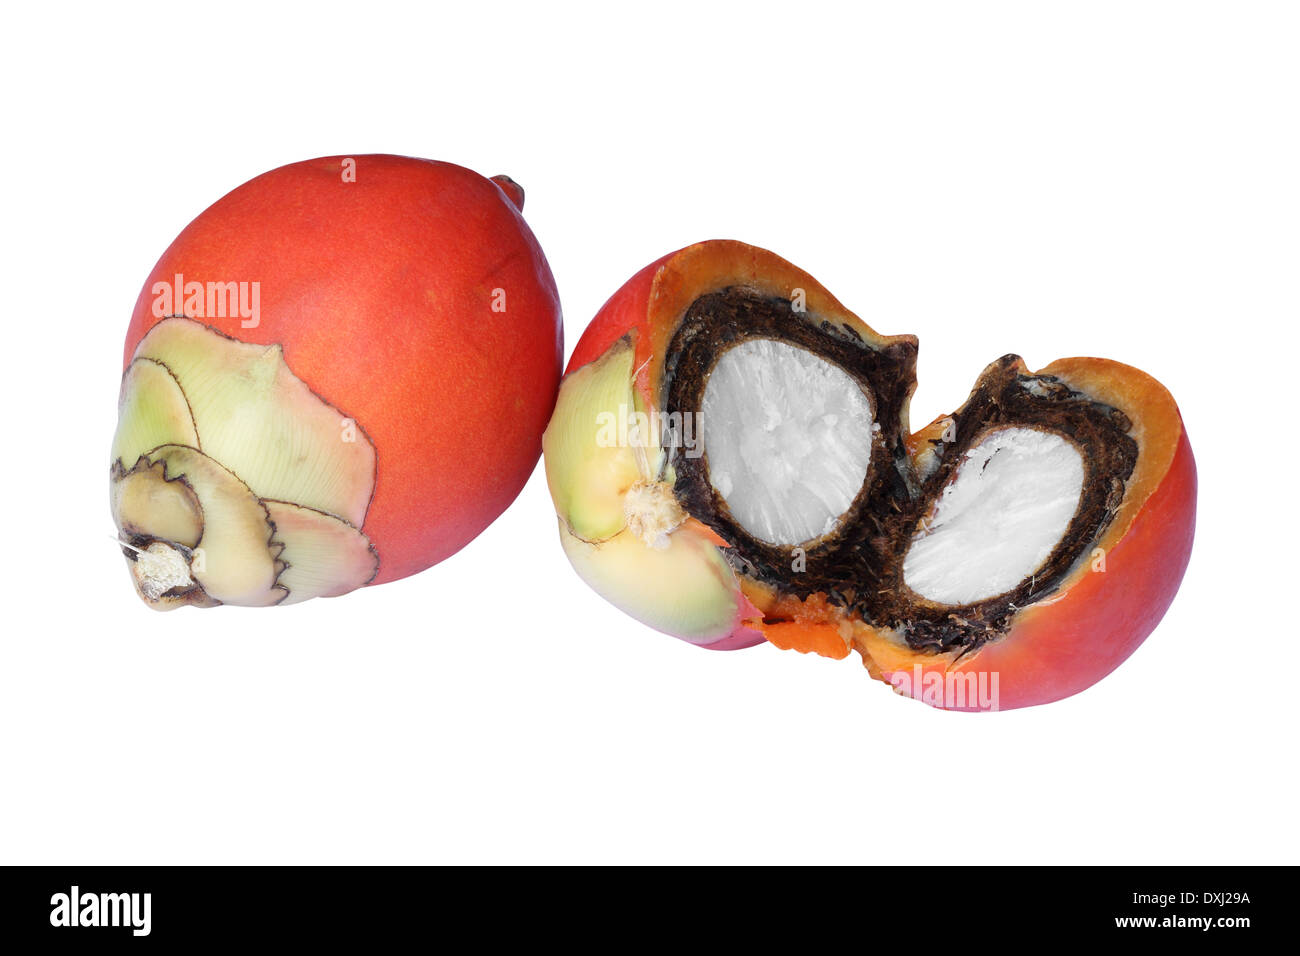 Fresh foxtail palm fruit (Wodyetia bifurcata) isolated on white background with clipping path Stock Photo